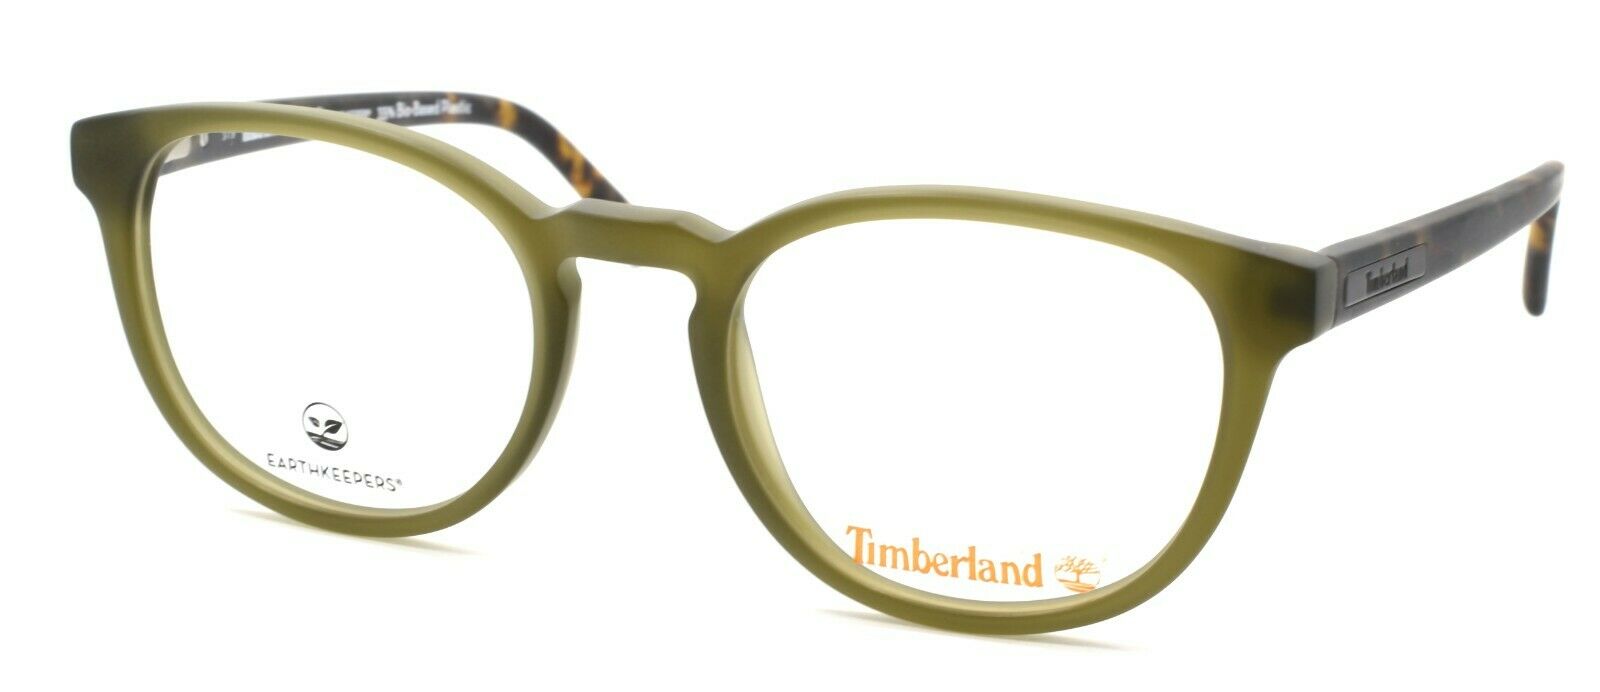 1-TIMBERLAND TB1579 097 Men's Eyeglasses Frames 49-19-145 Matte Dark Green + CASE-664689913466-IKSpecs